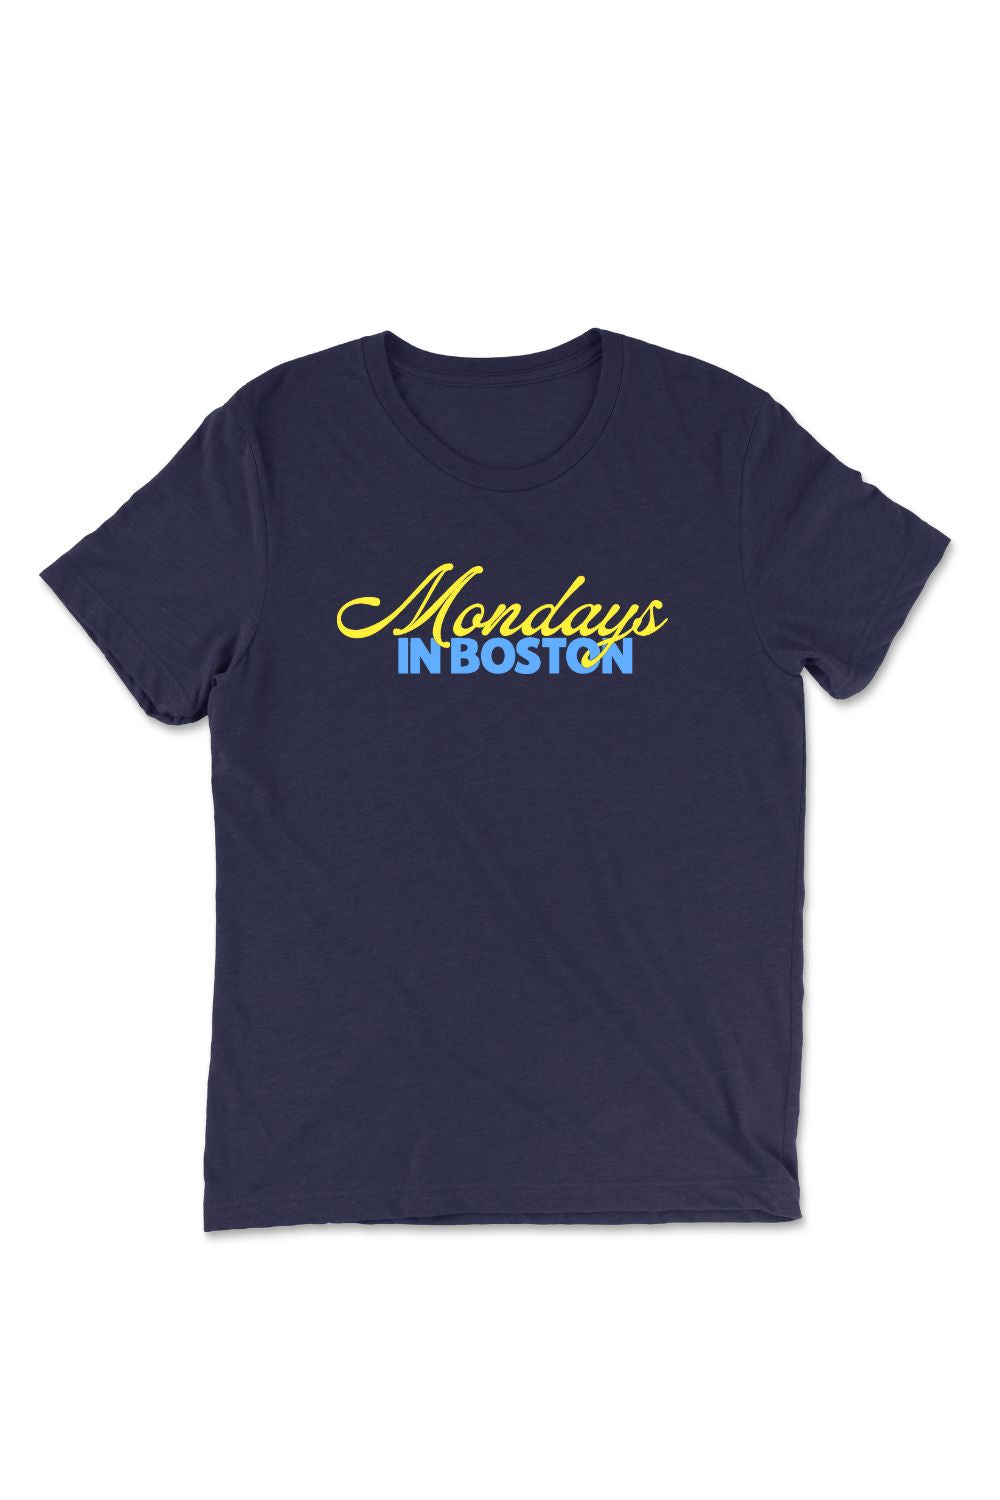 Mondays In Boston T-shirt